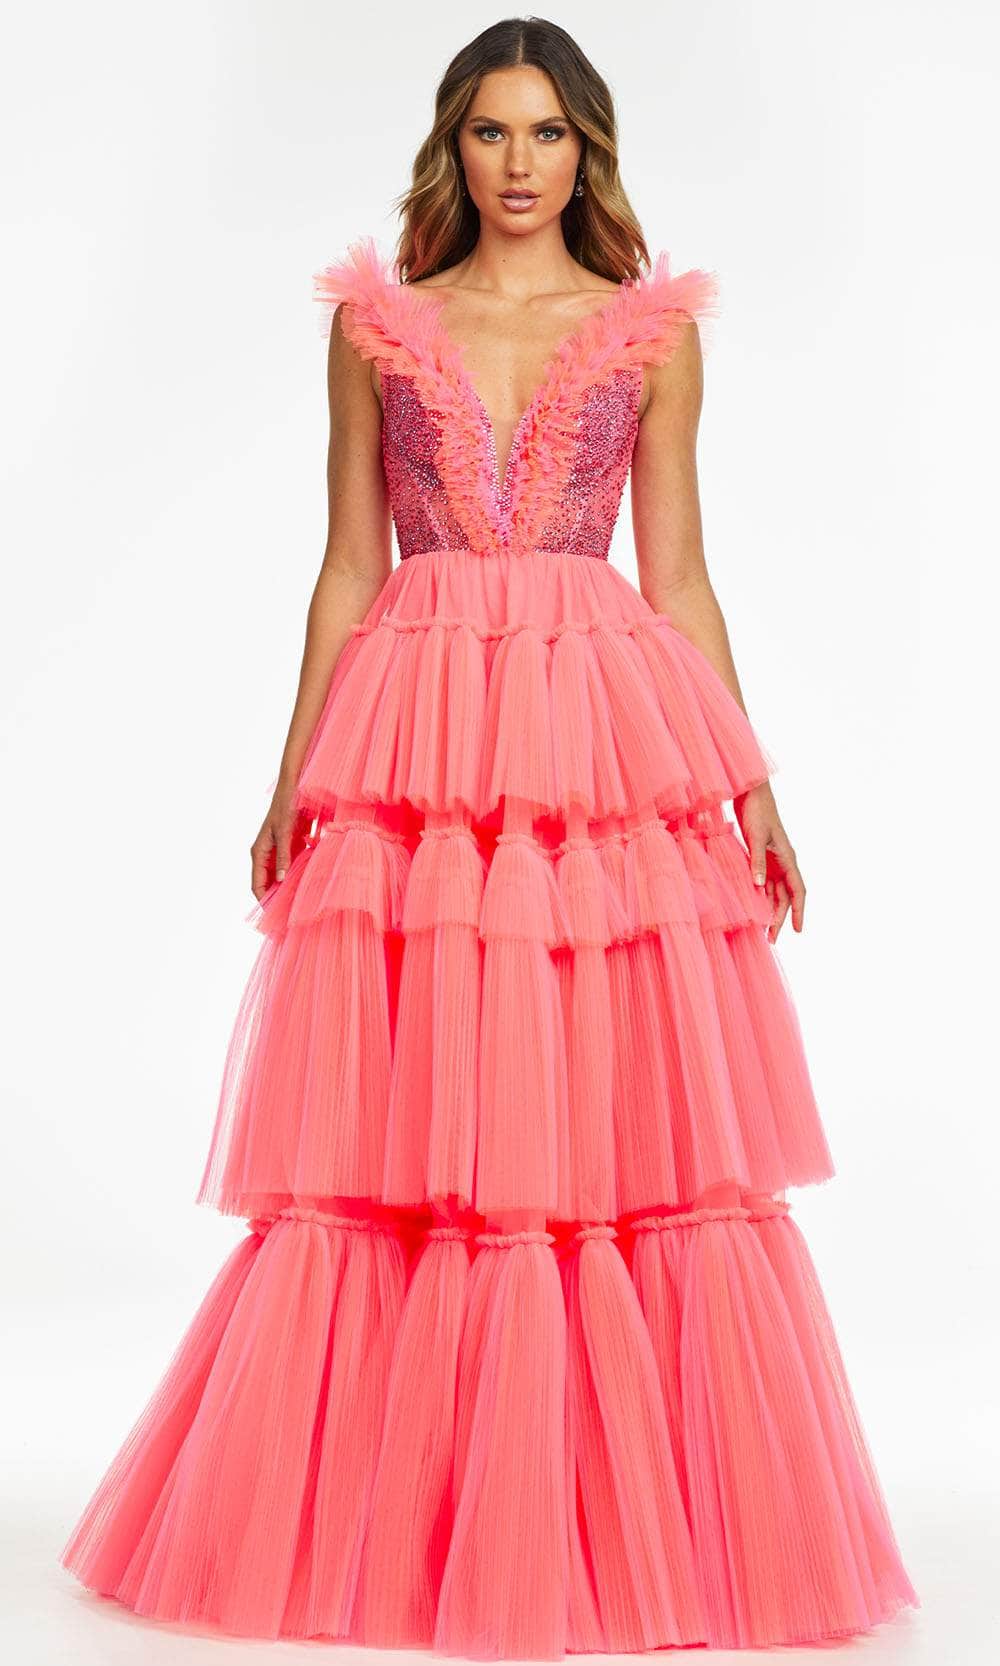 Ashley Lauren 11140 - Tiered Tulle Ballgown Special Occasion Dress 0 / Hot Pink/Orange